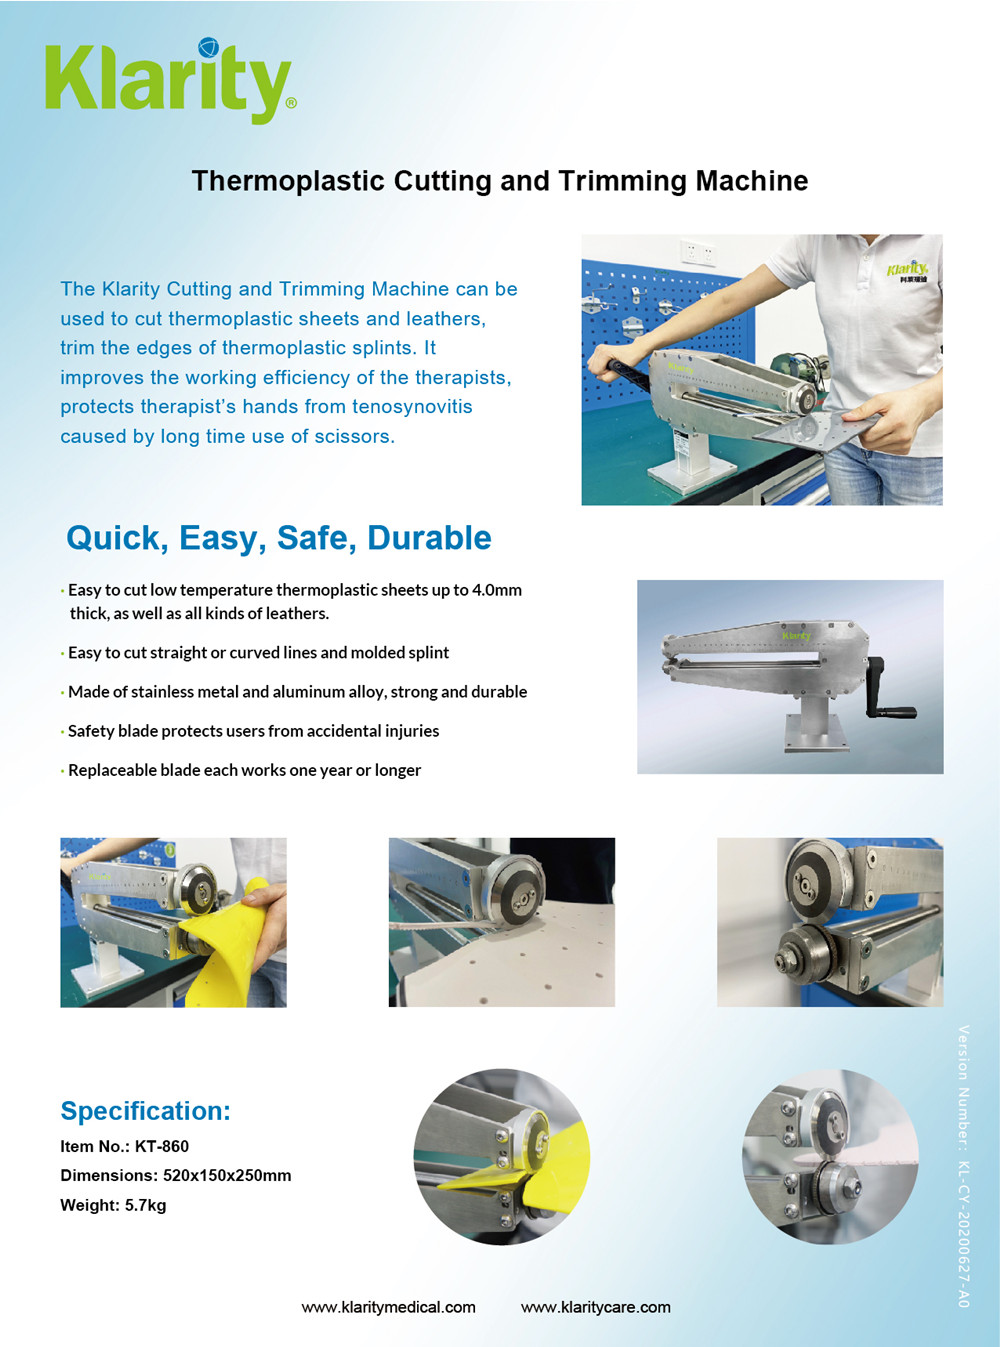 Klarity Thermoplastic Cutting and Trimming Machine.jpg